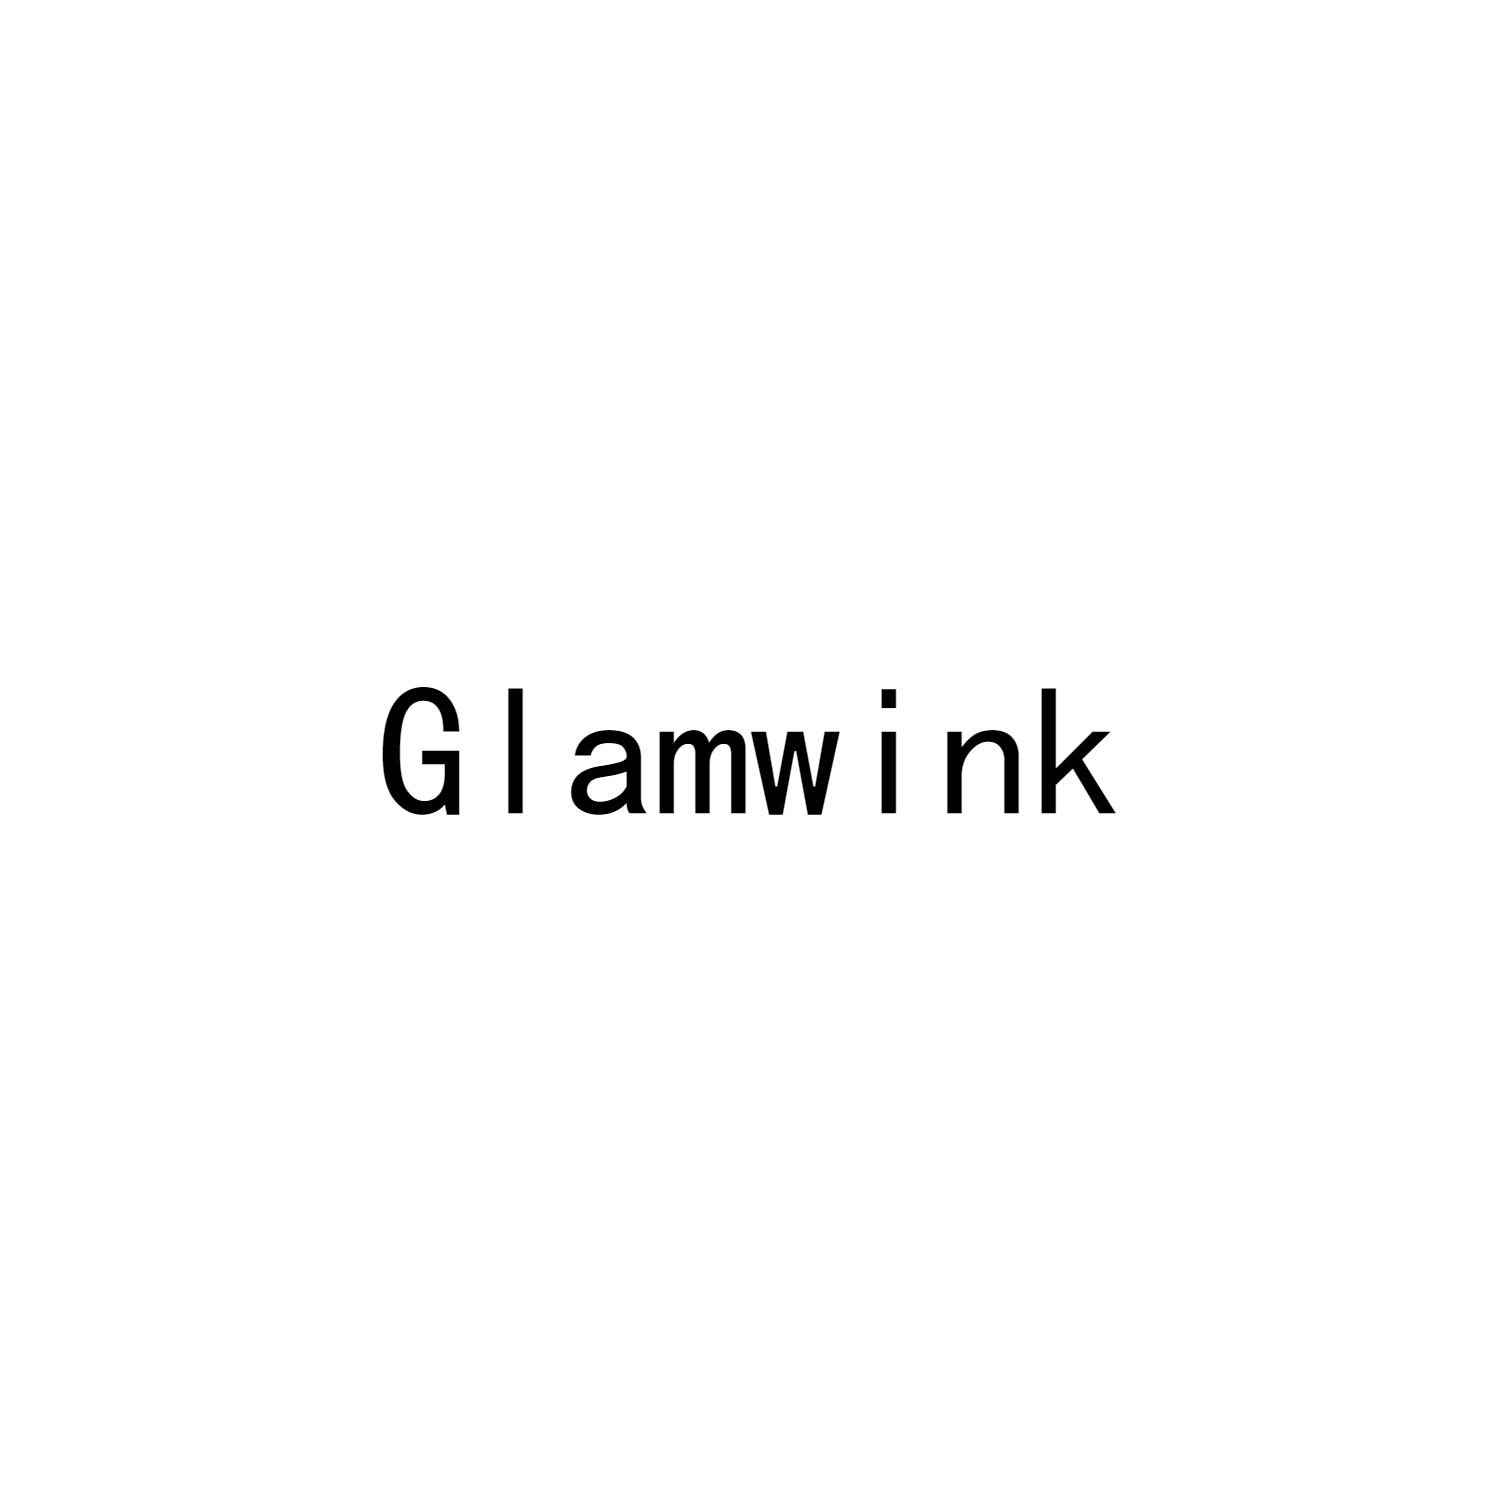 GLAMWINK